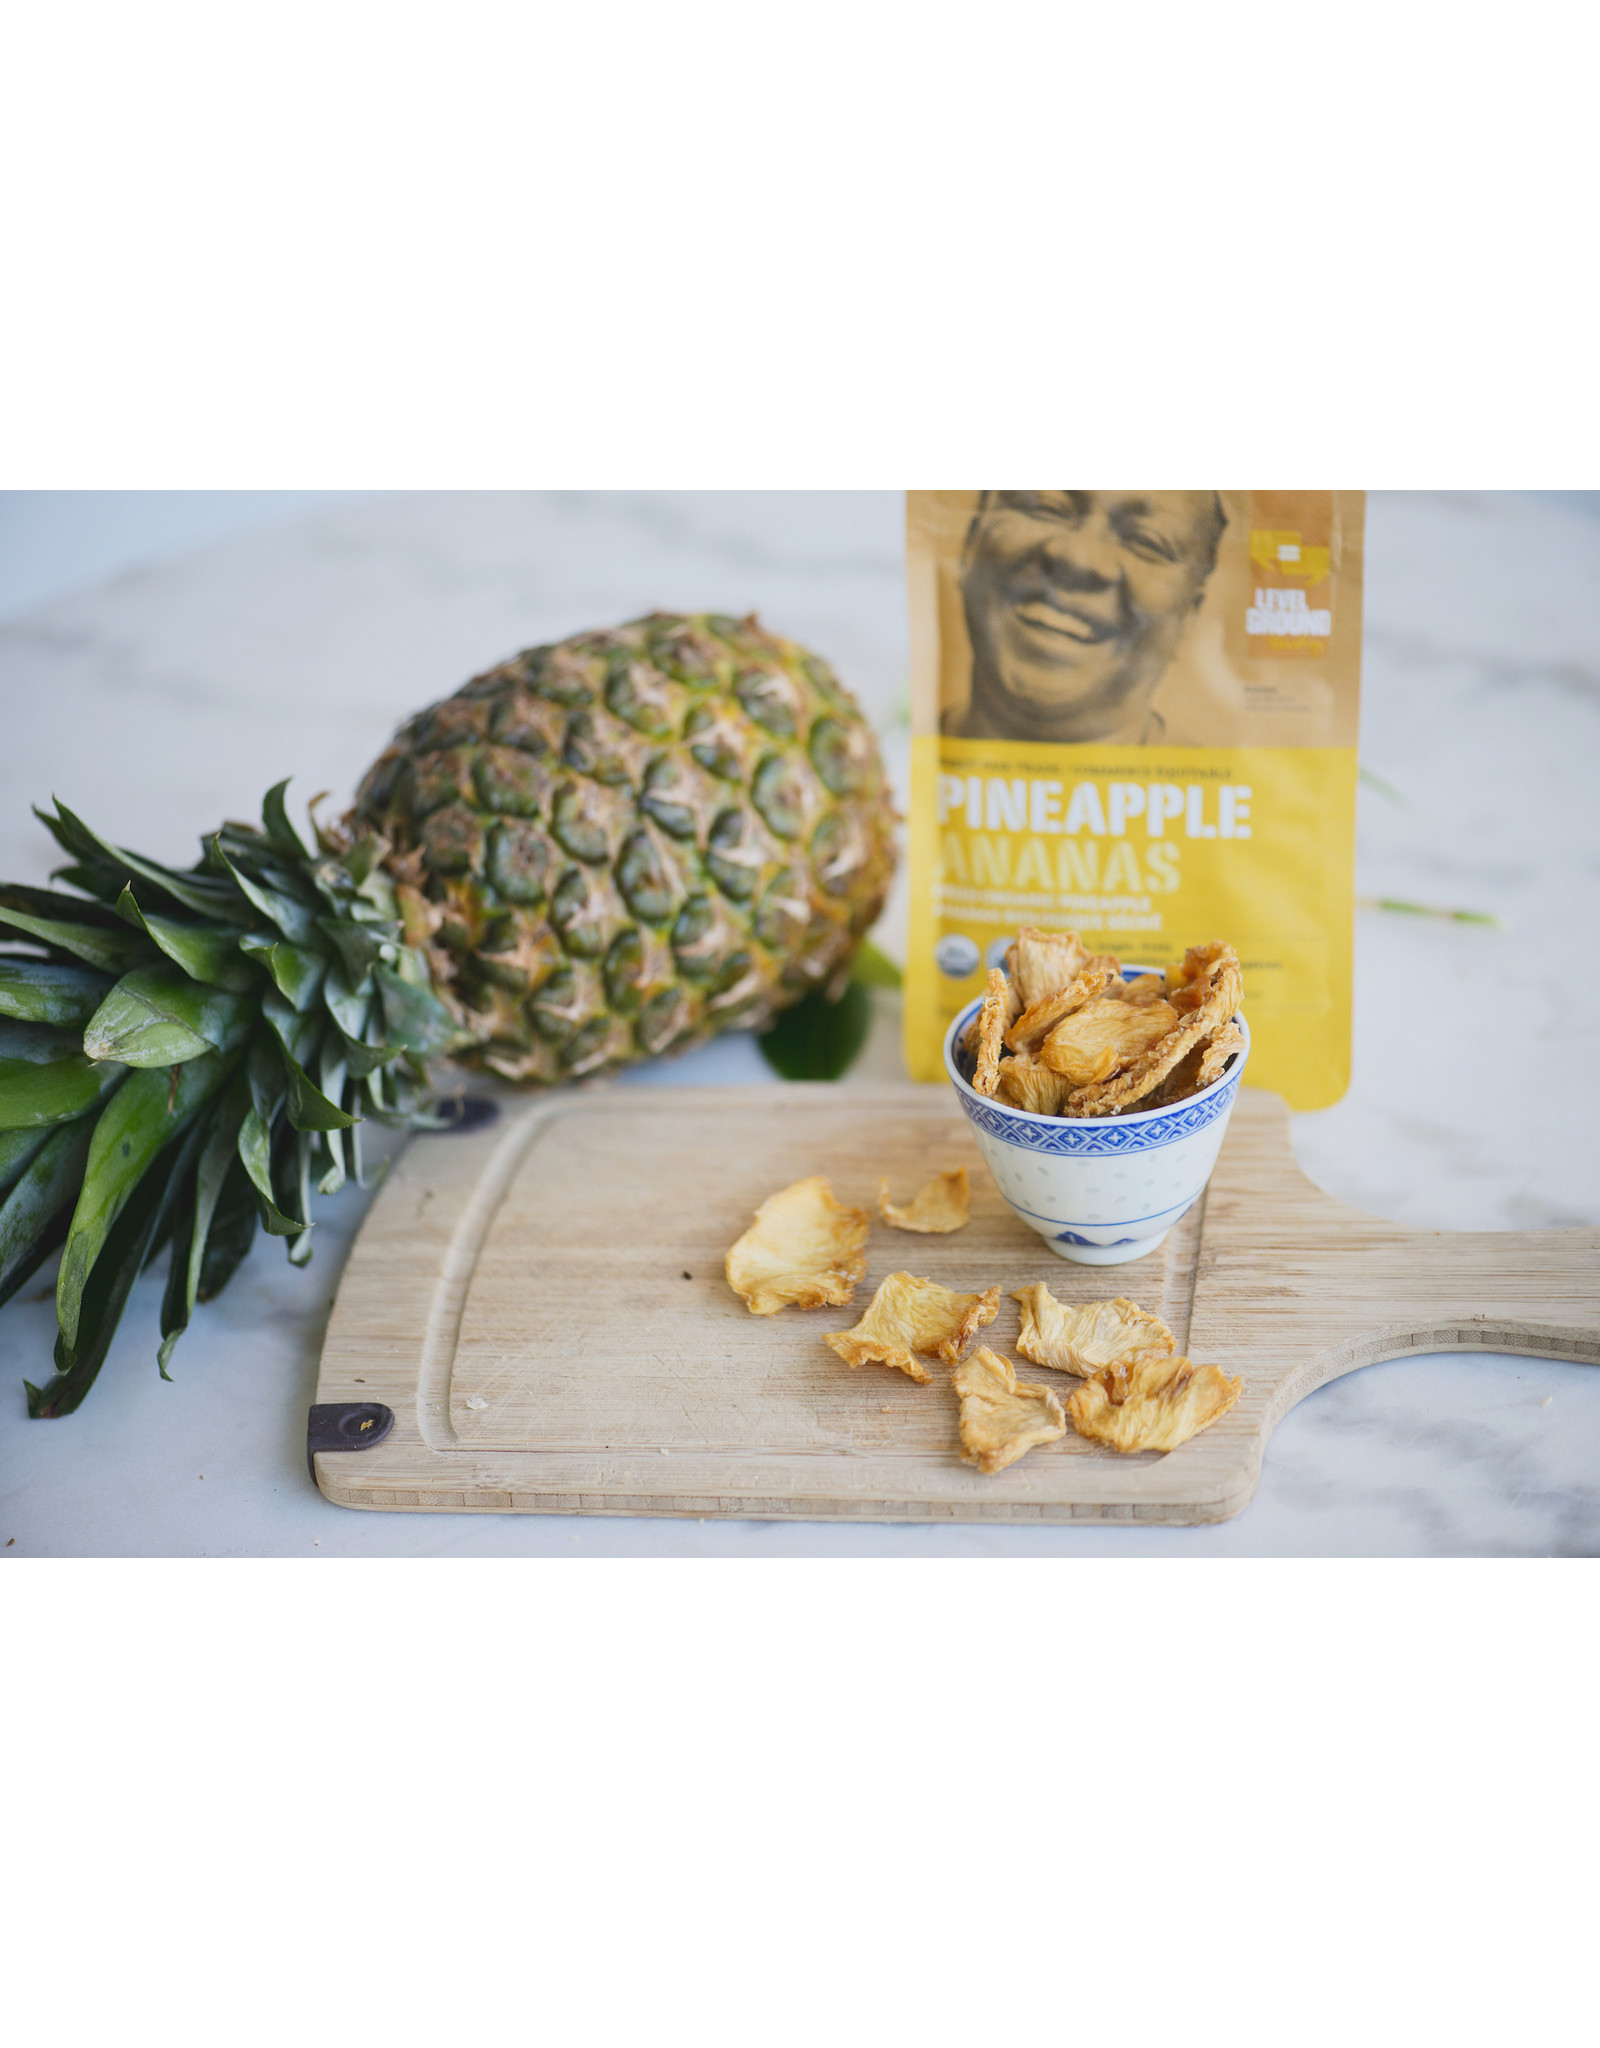 Colombia Premium Organic Dried Pineapple